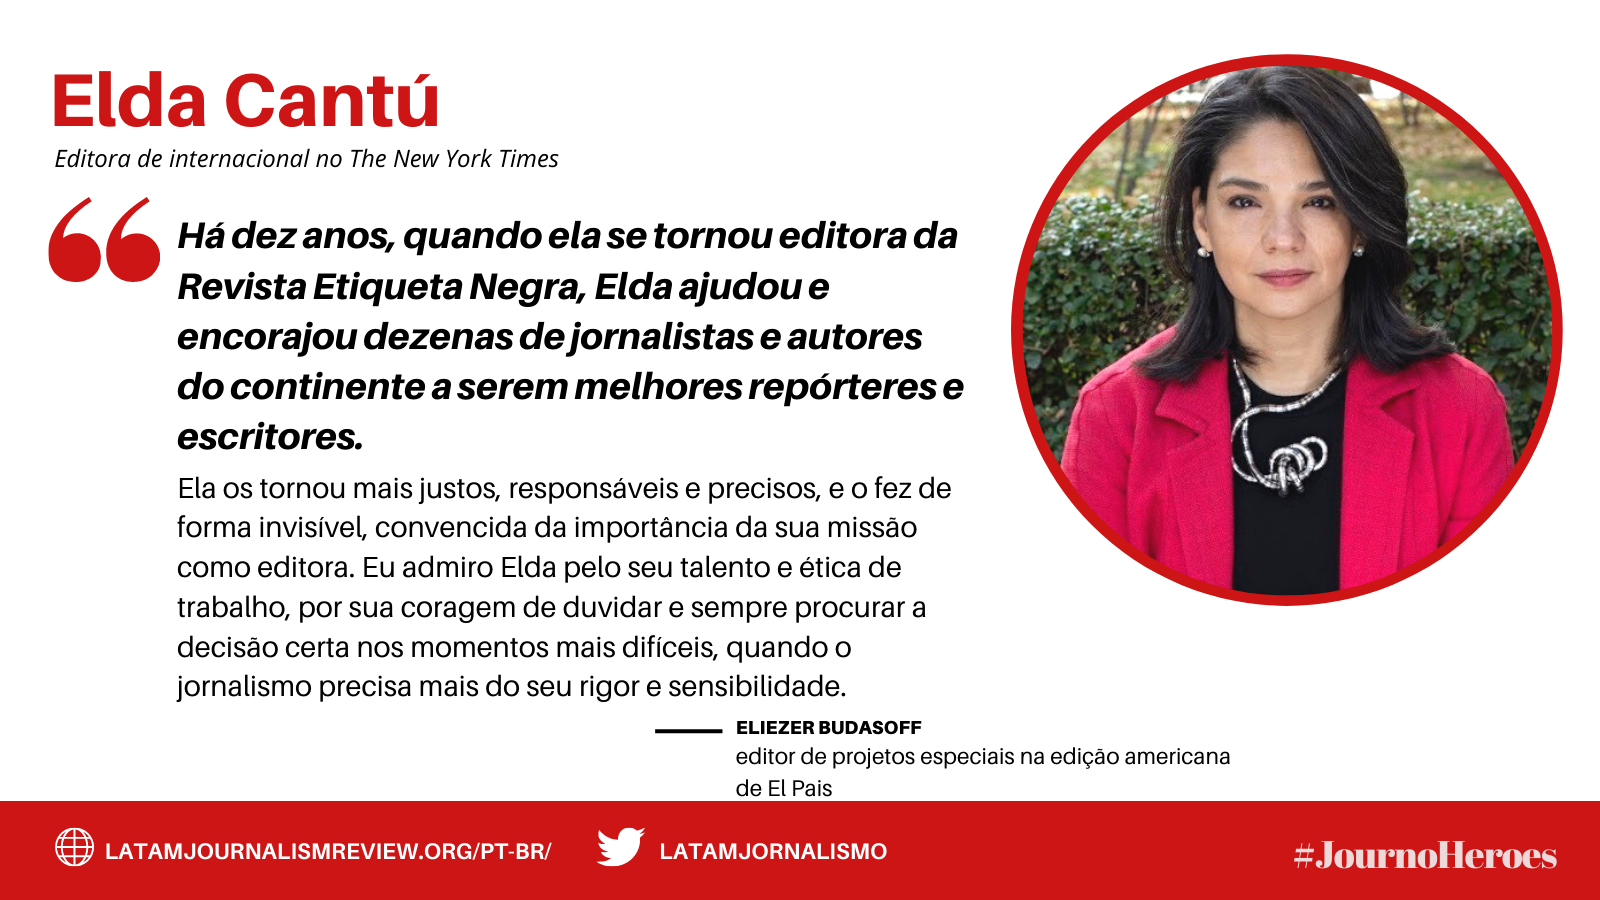 #JOURNOHEROES ELDA CANTU PT